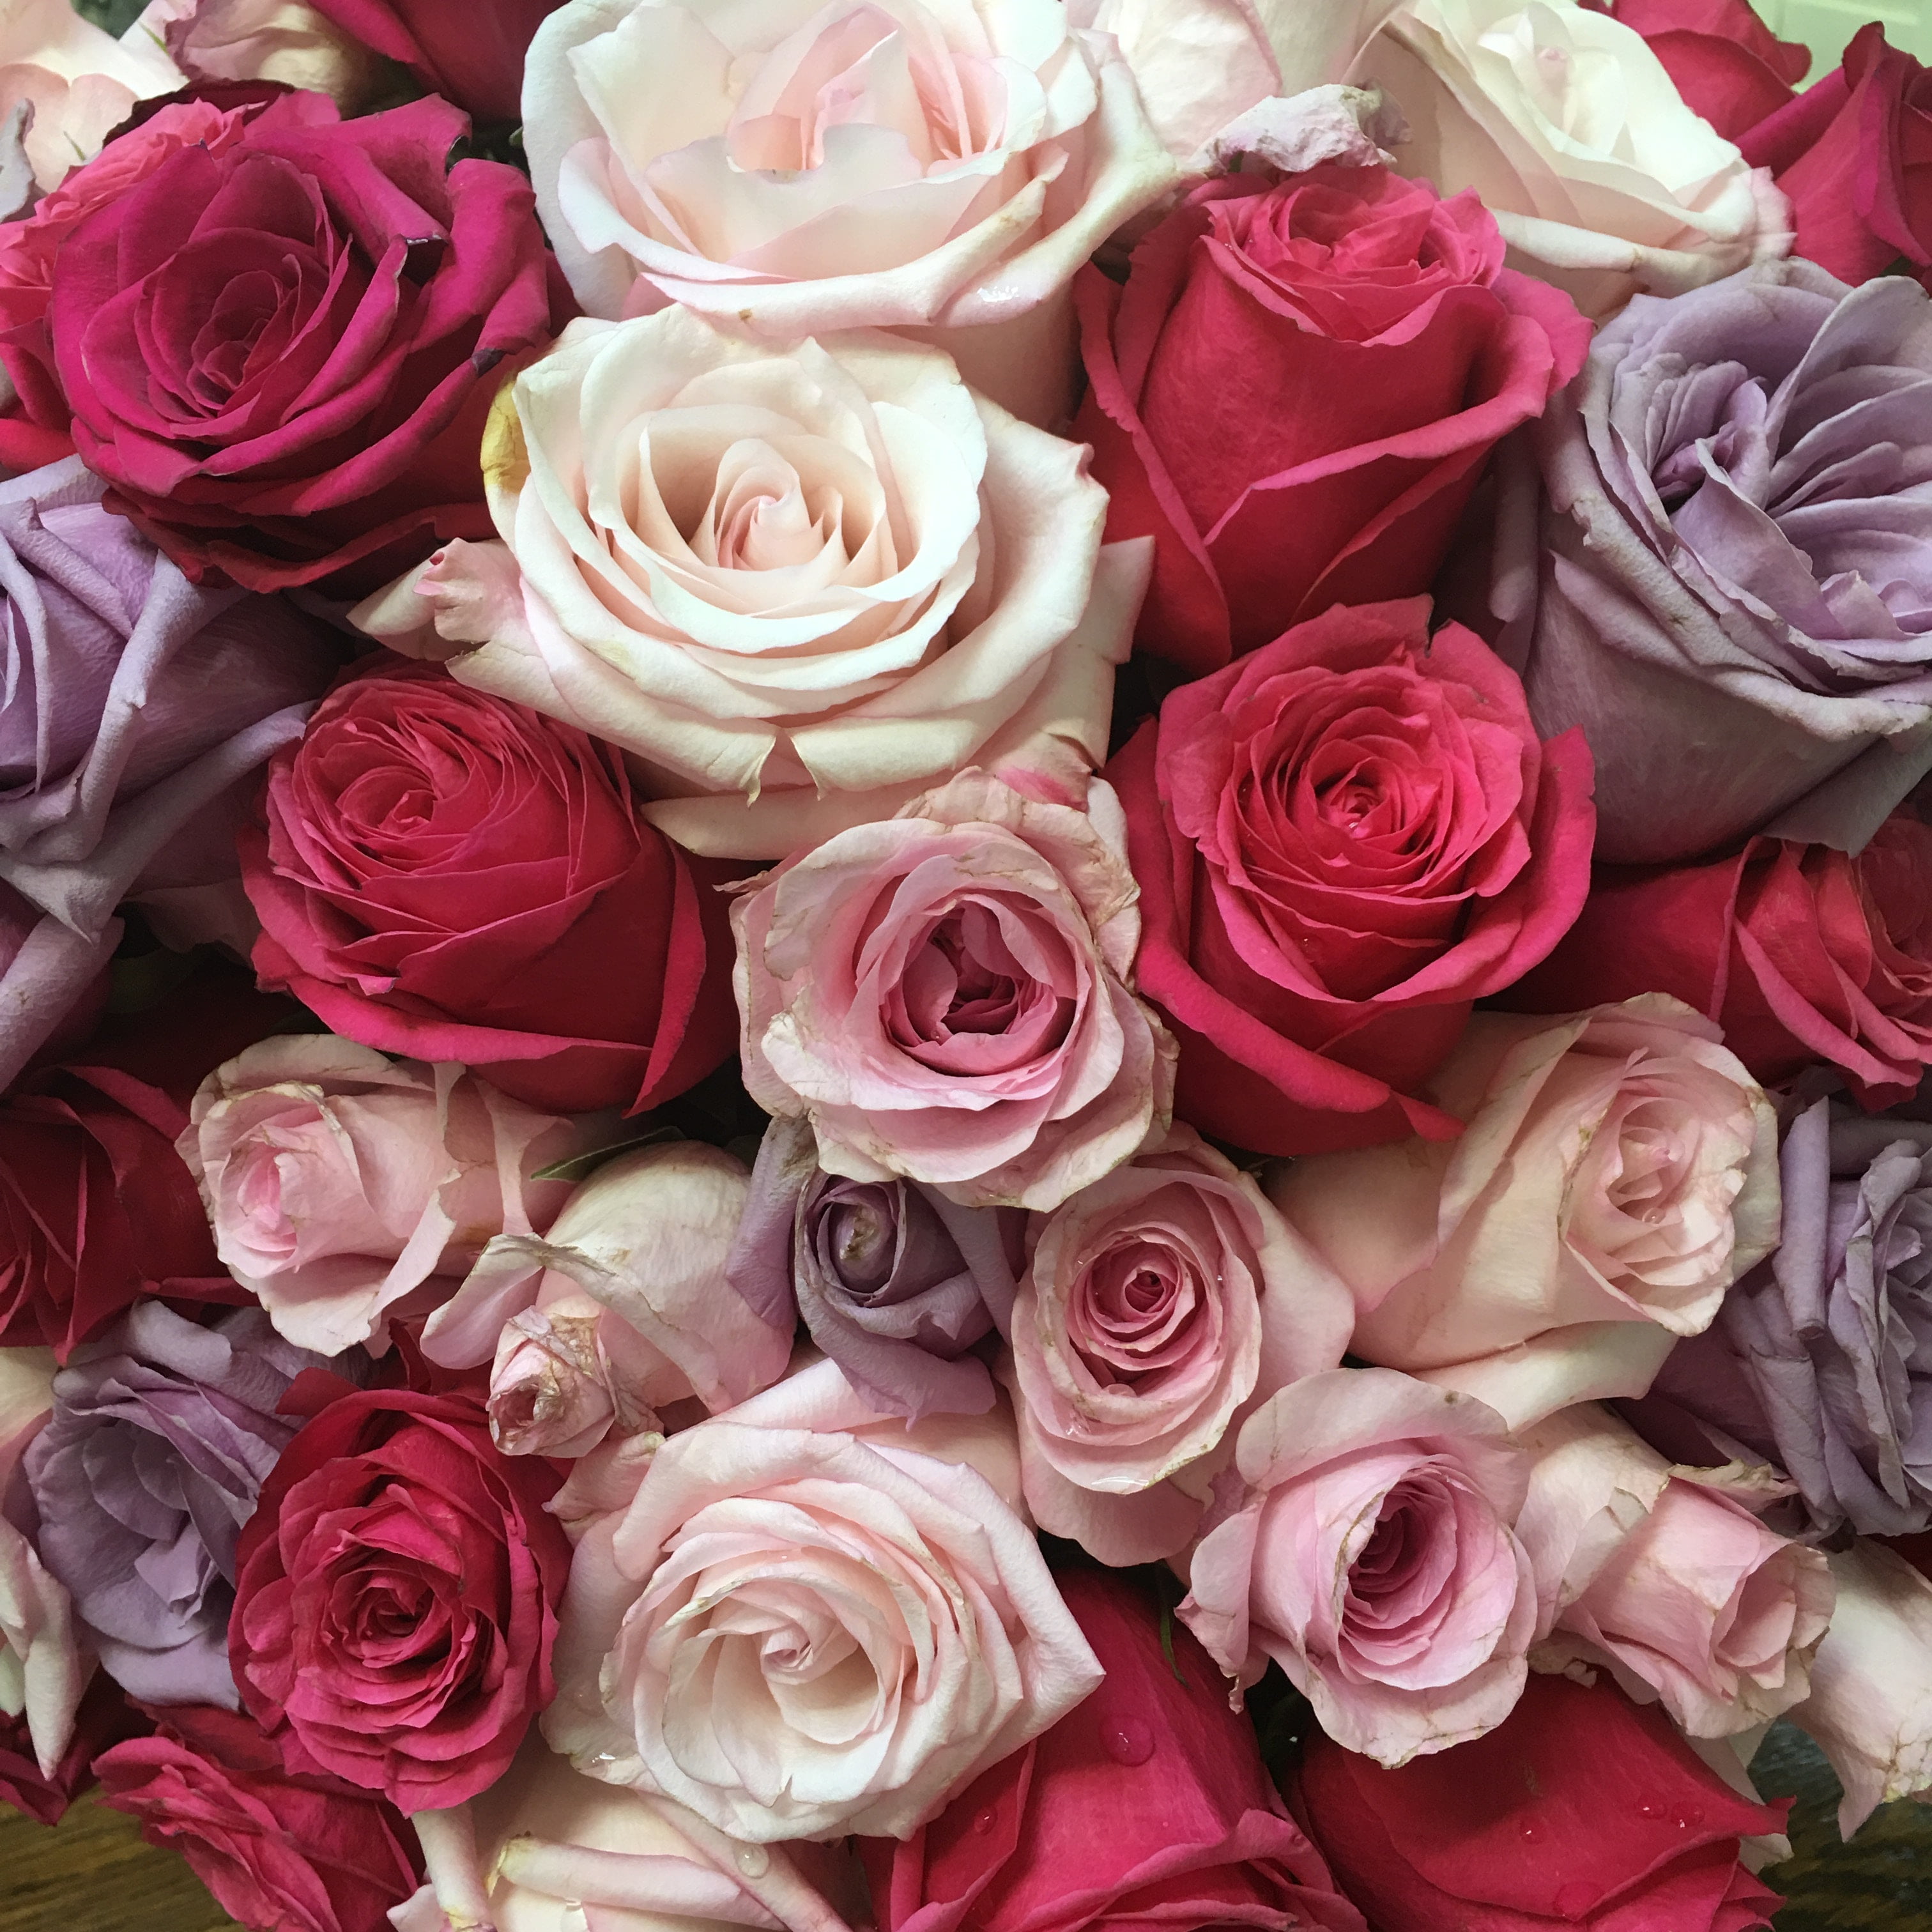 rose wallpaper hd,flor,rosa,rosas de jardín,rosado,cortar flores